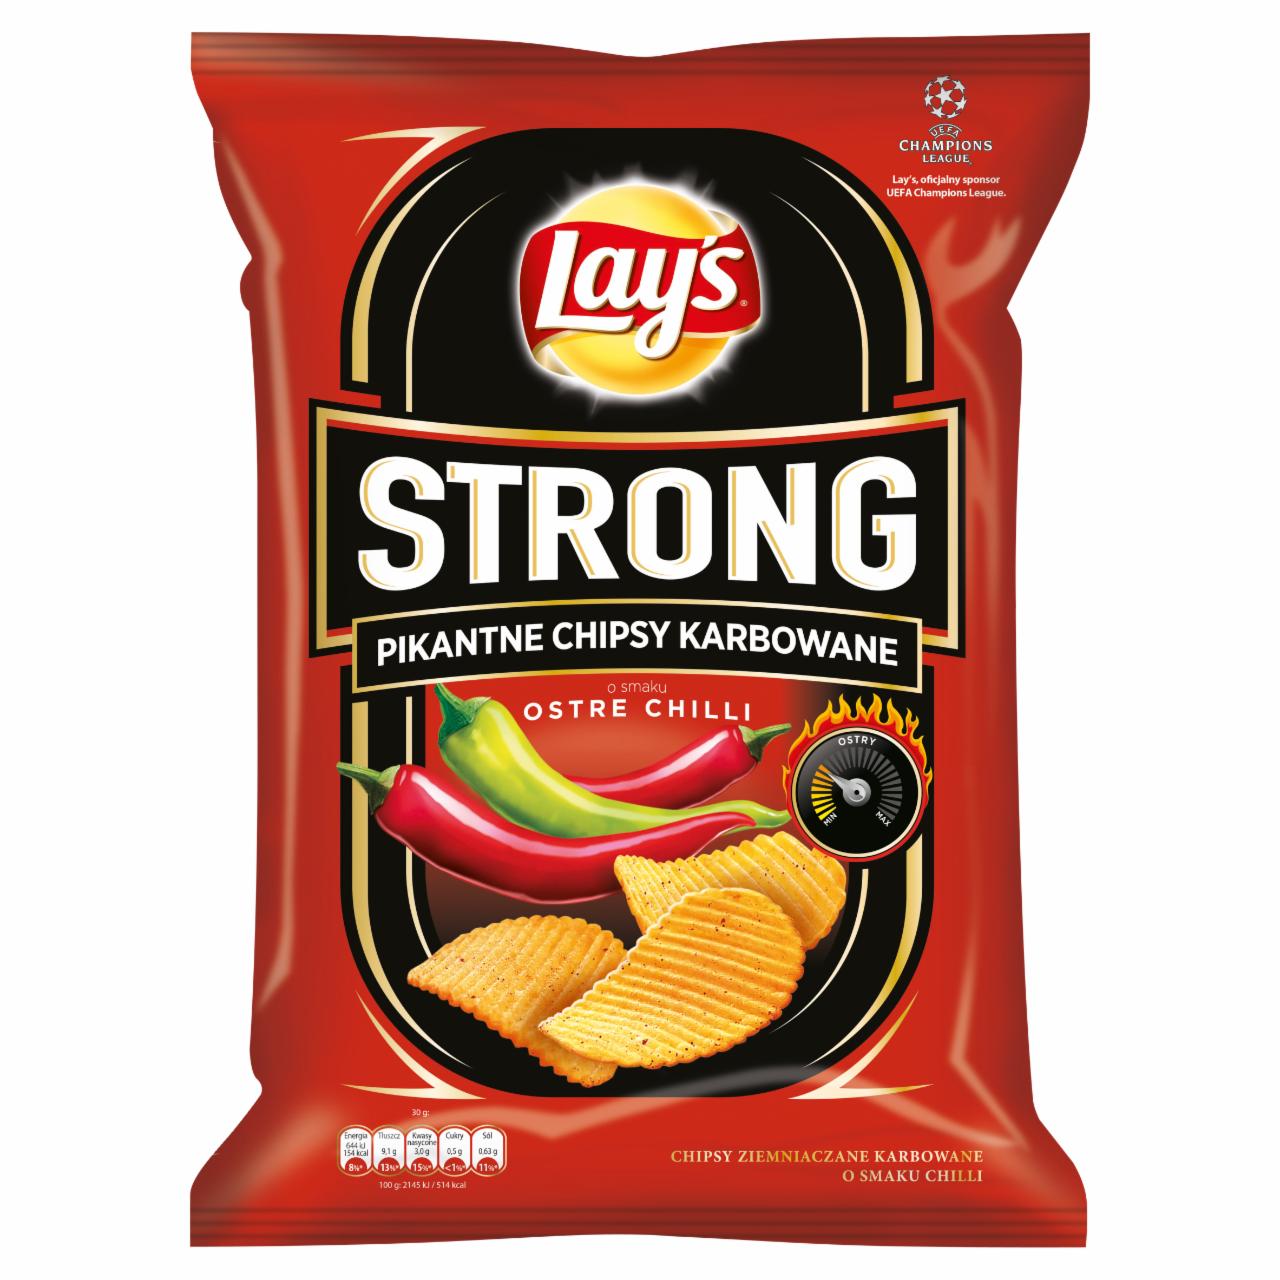 Zdjęcia - Lay's Strong Pikantne chipsy karbowane o smaku ostre chilli 225 g